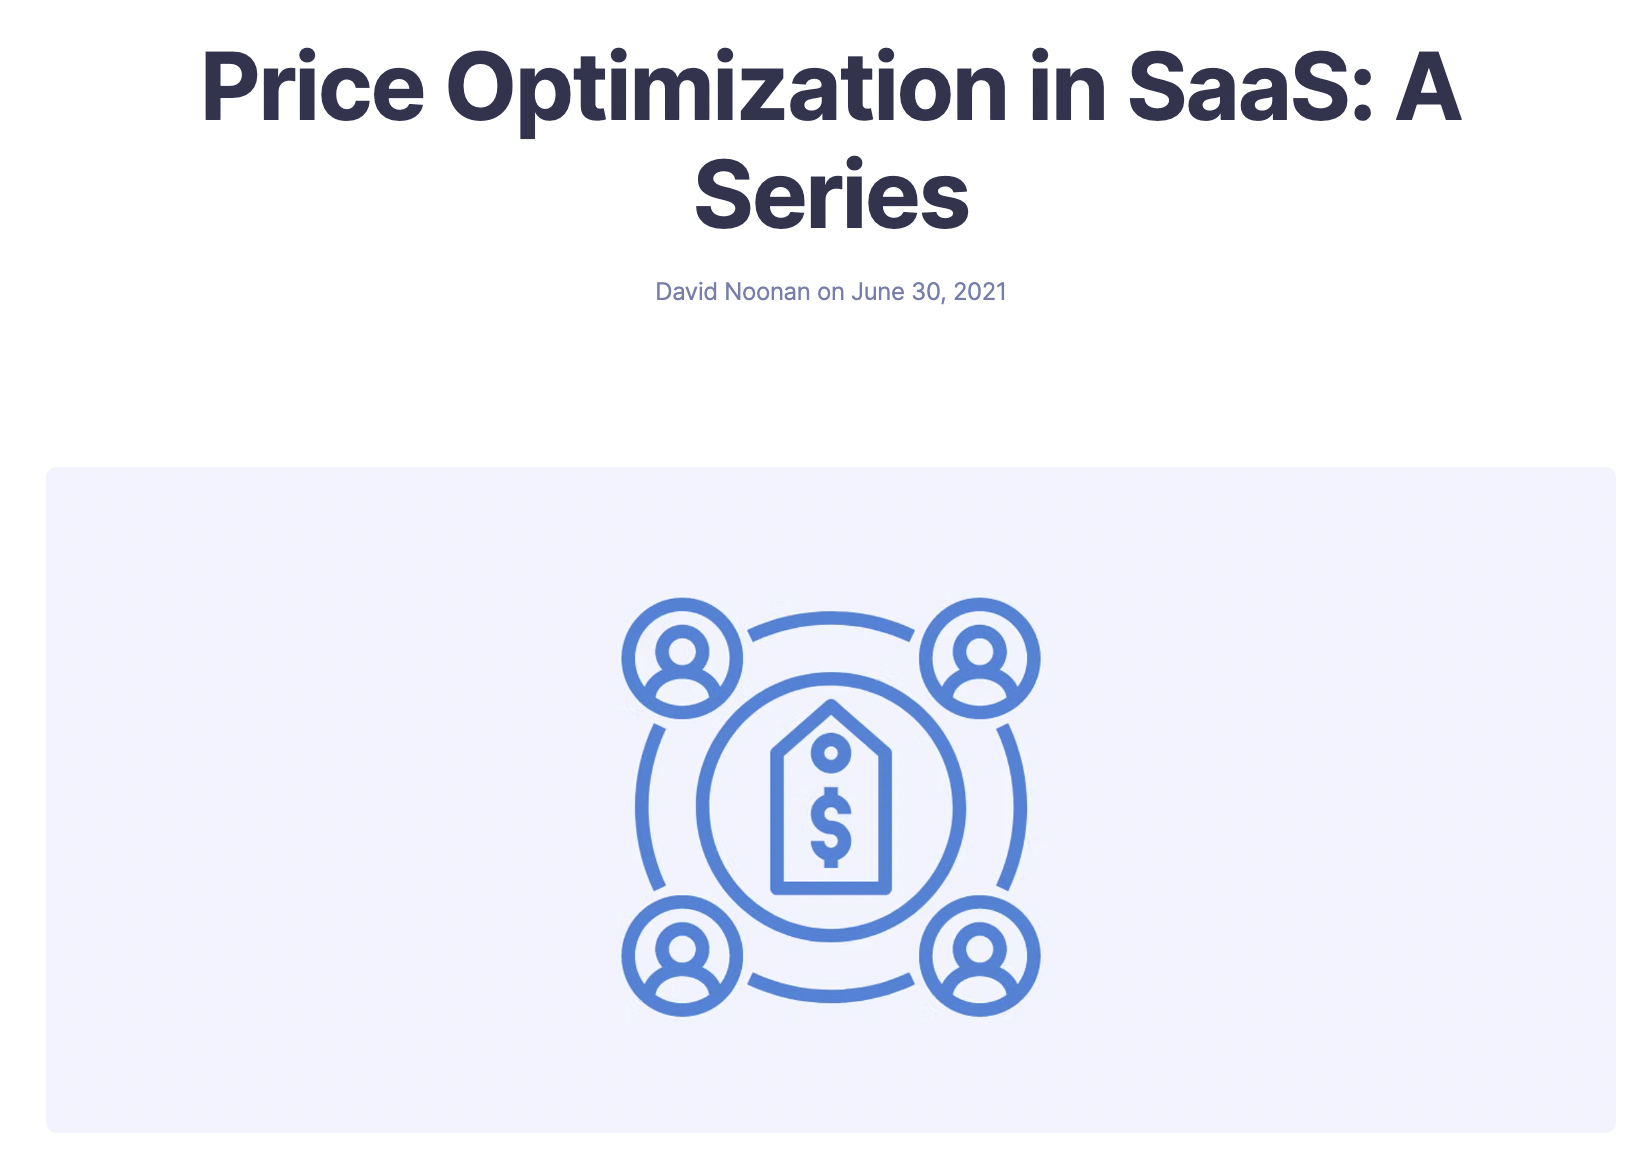 Price optimization